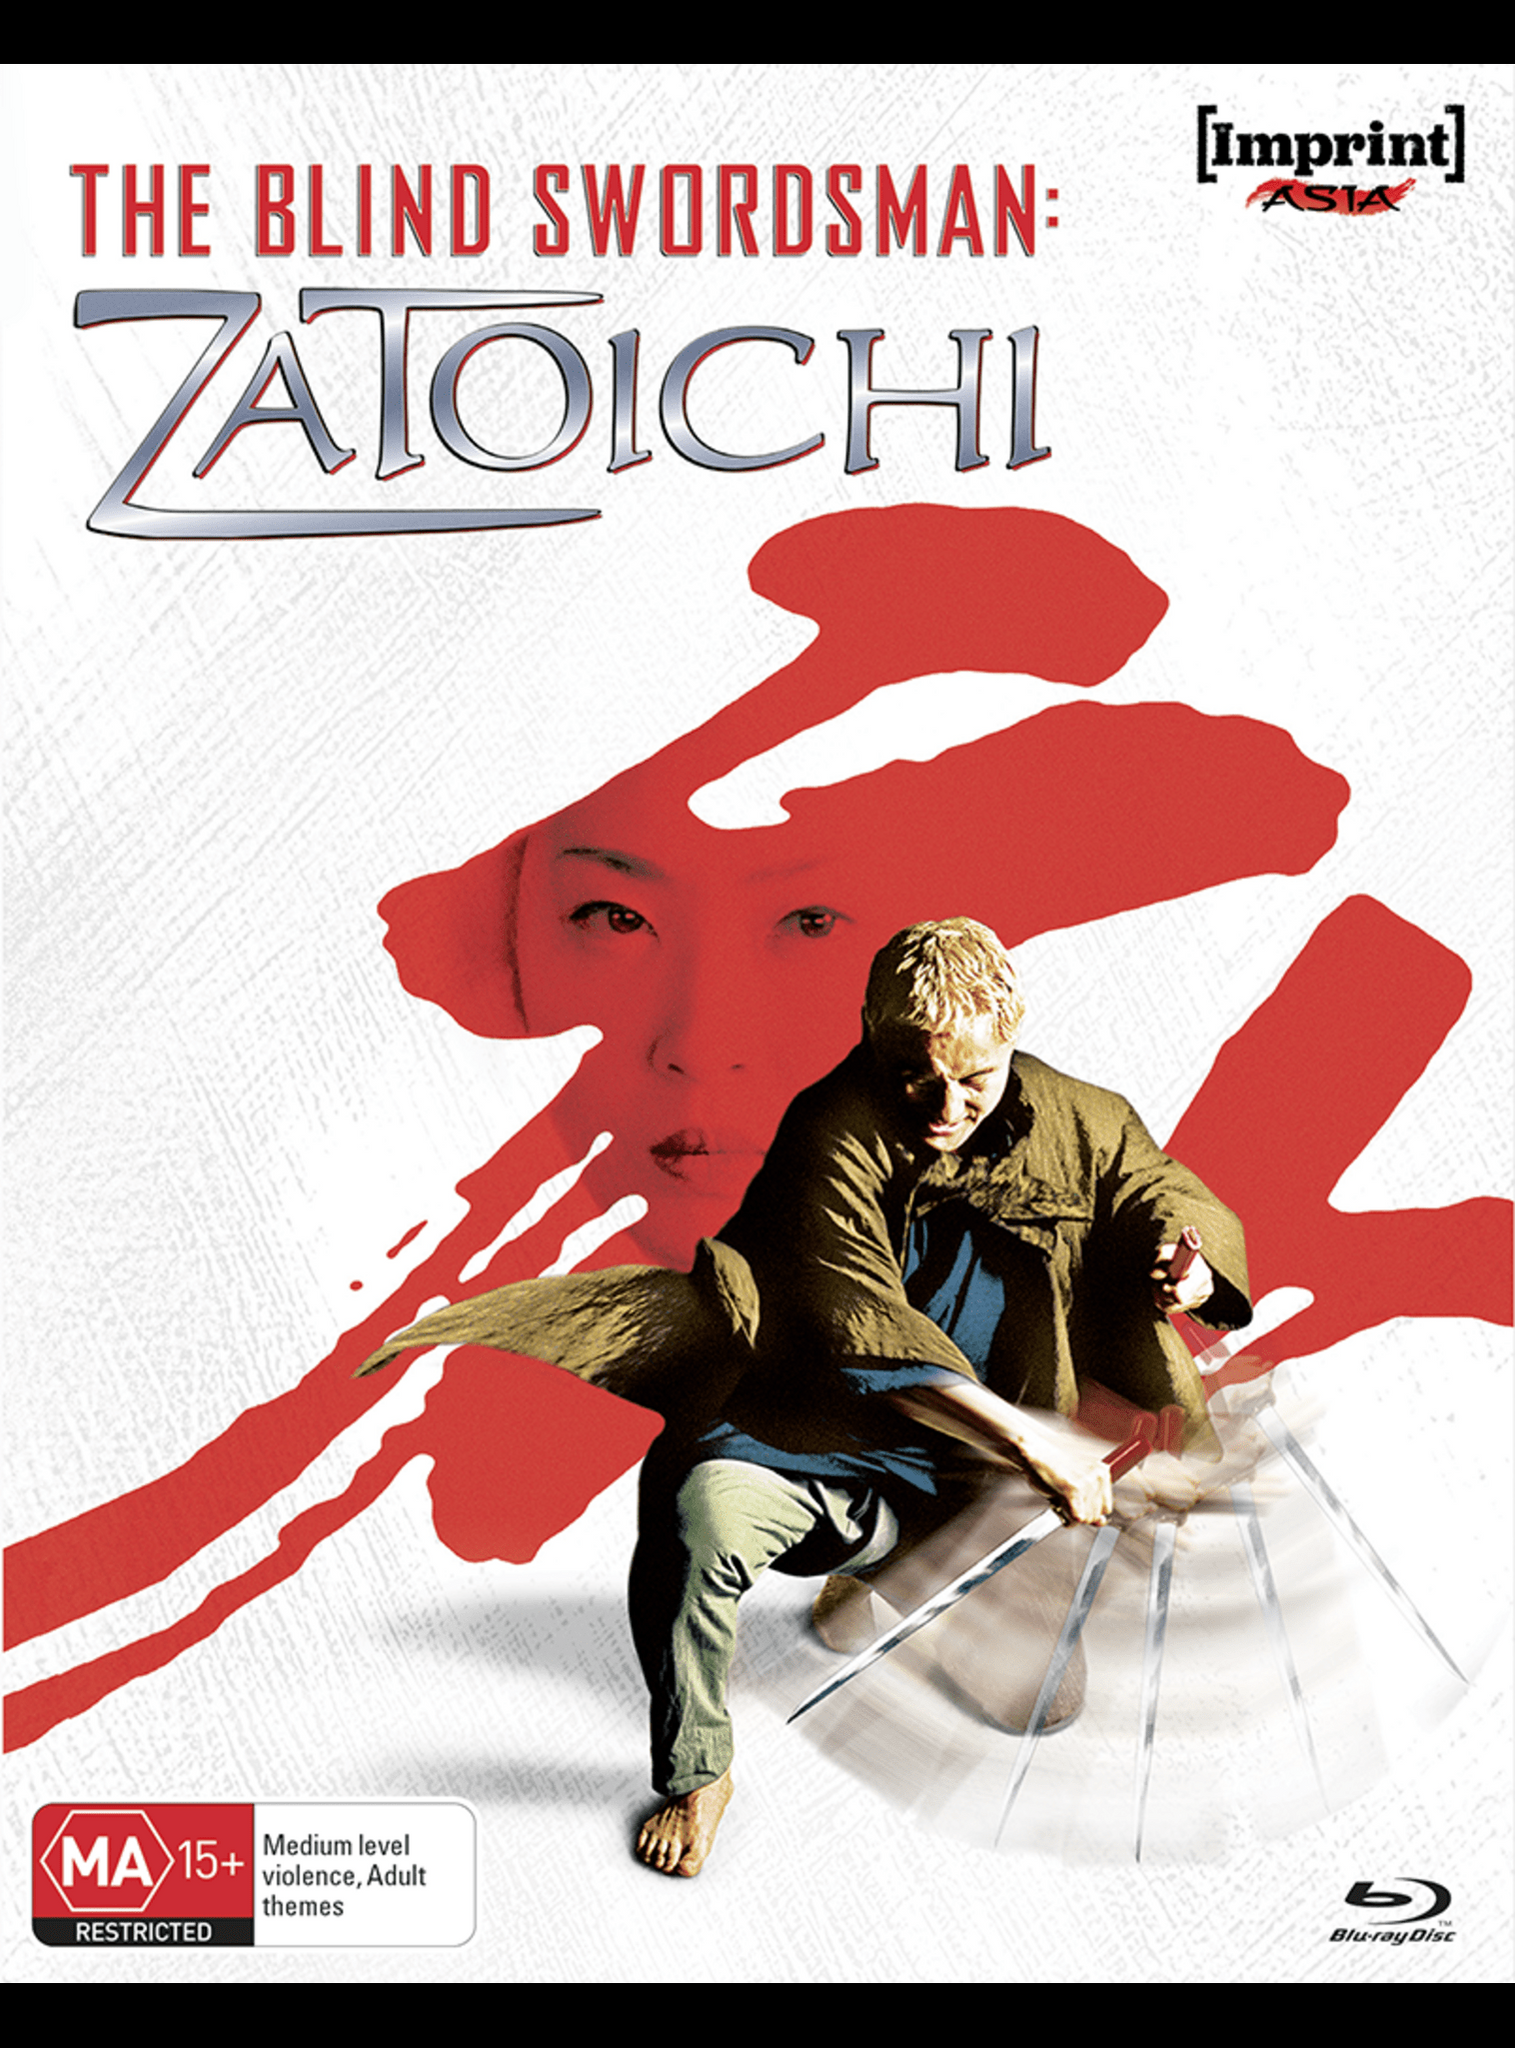 THE BLIND SWORDSMAN: ZATOICHI (IMPRINT ASIA COLLECTION #3) - BLU-RAY